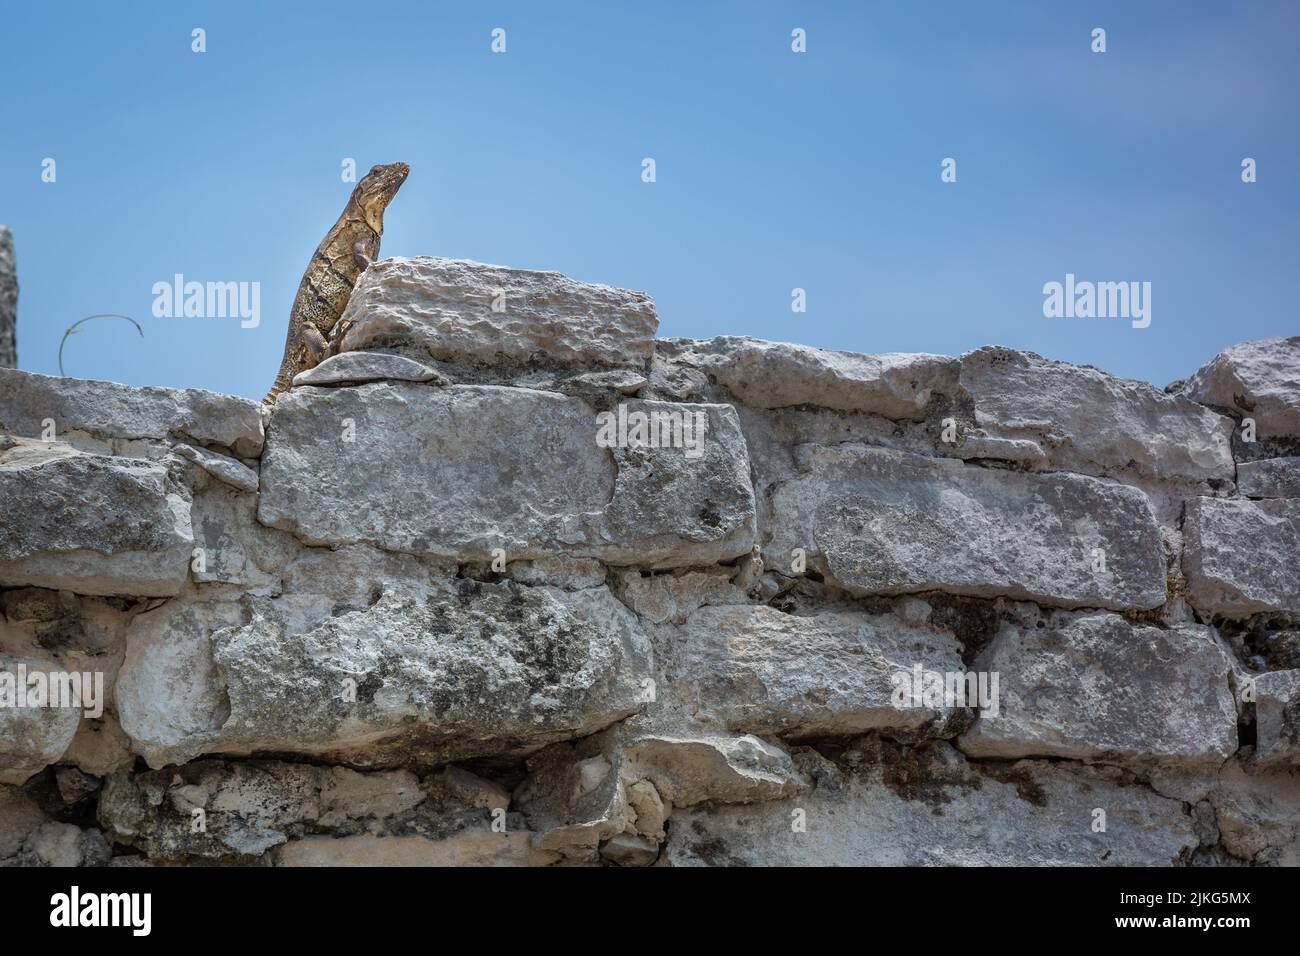 Lizard reptile over old ruin of Ancient Mayan civilization, Mexico Stock Photo